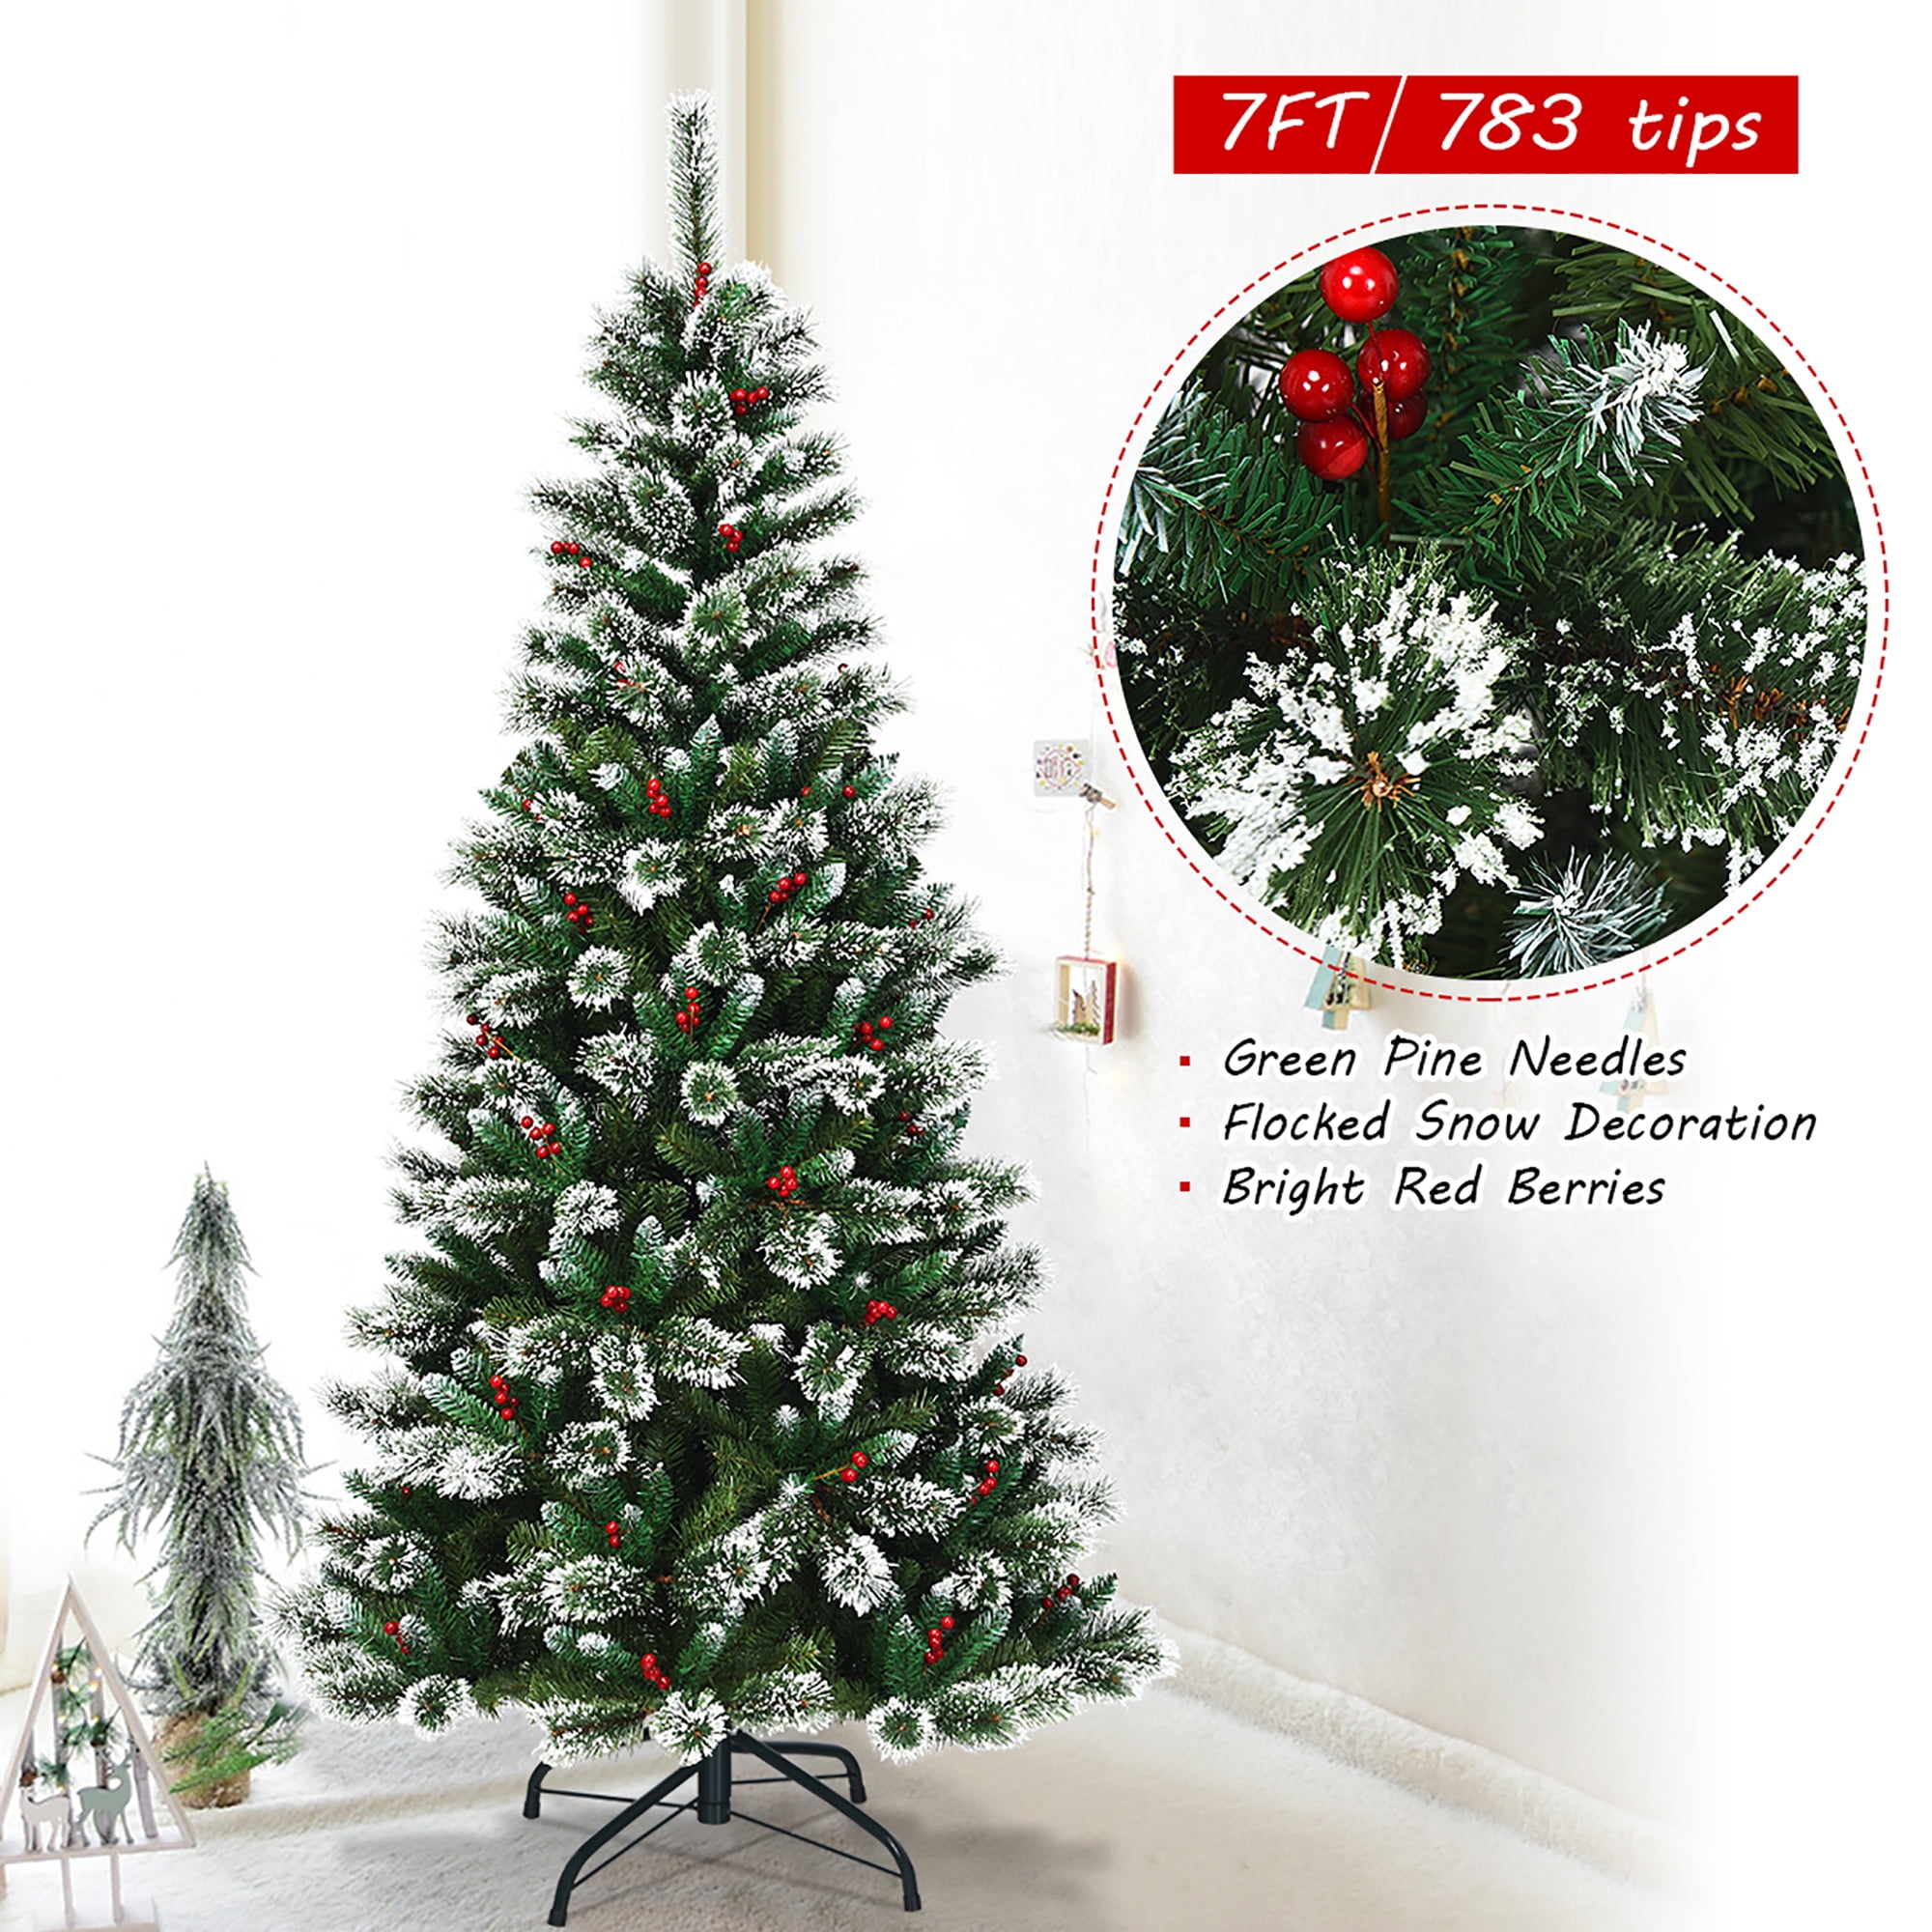 Deluxe Austrian Fir Christmas Tree 210cm Details about   7ft 